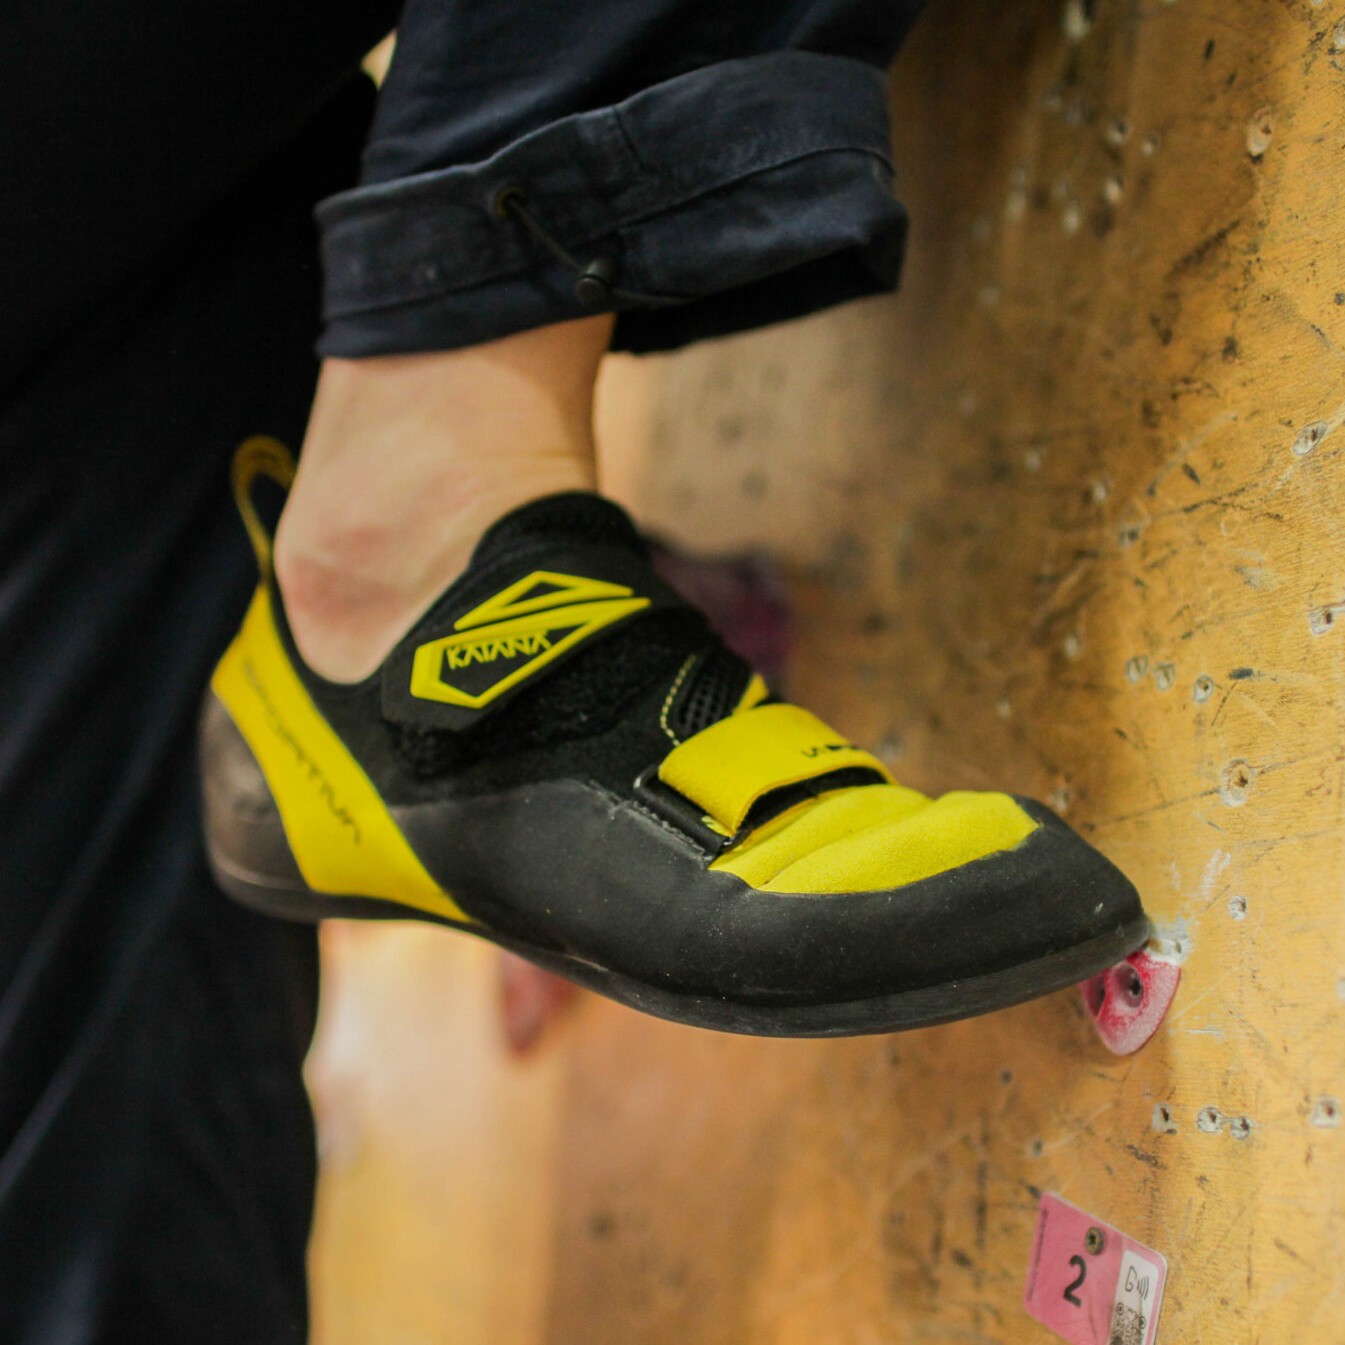 La Sportiva Katana Rock Climbing Shoe